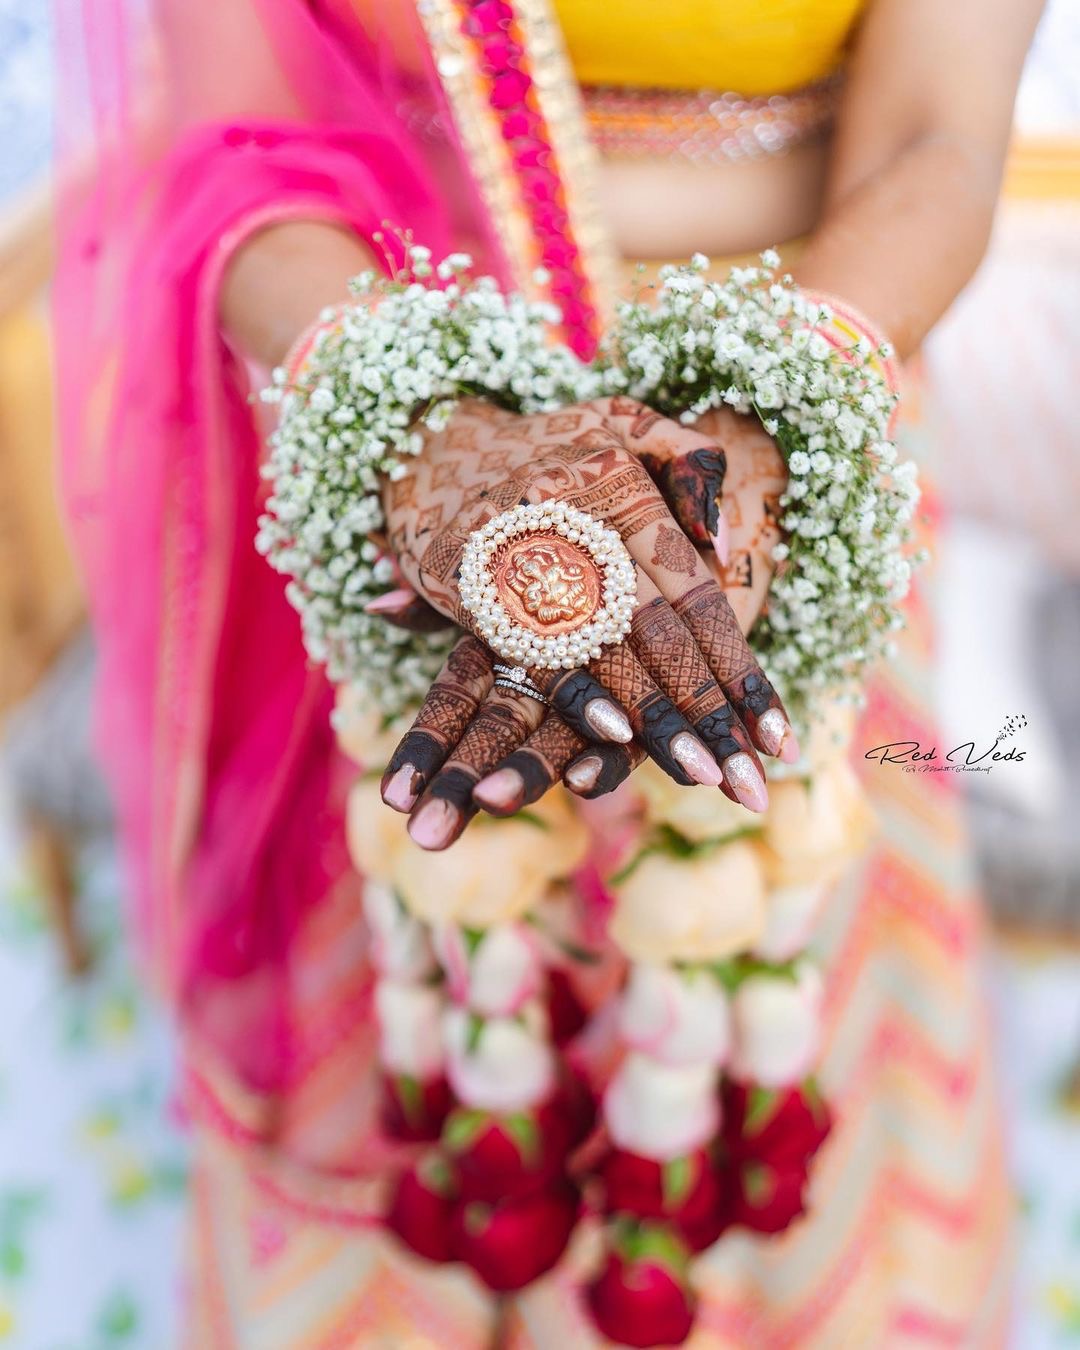 SetMyWed - Latest Wedding Ideas & Inspiration | Bridal photography poses,  Engagement pictures poses, Engagement photography poses